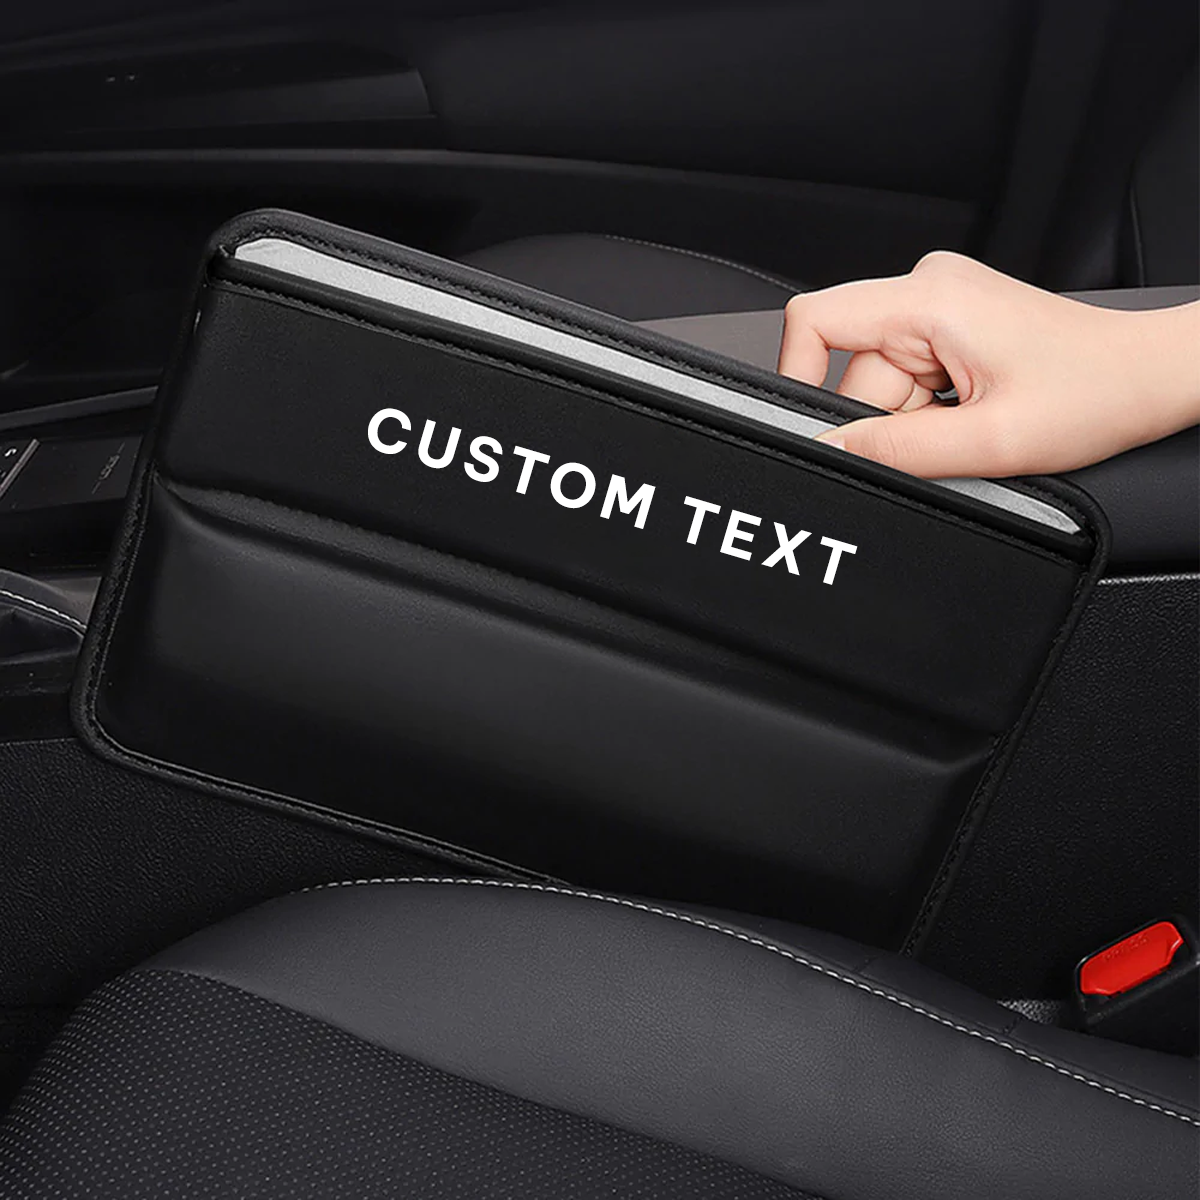 2pcs Leather Car Seat Gap Filler Universal Fit Organizer Sto - Inspire  Uplift